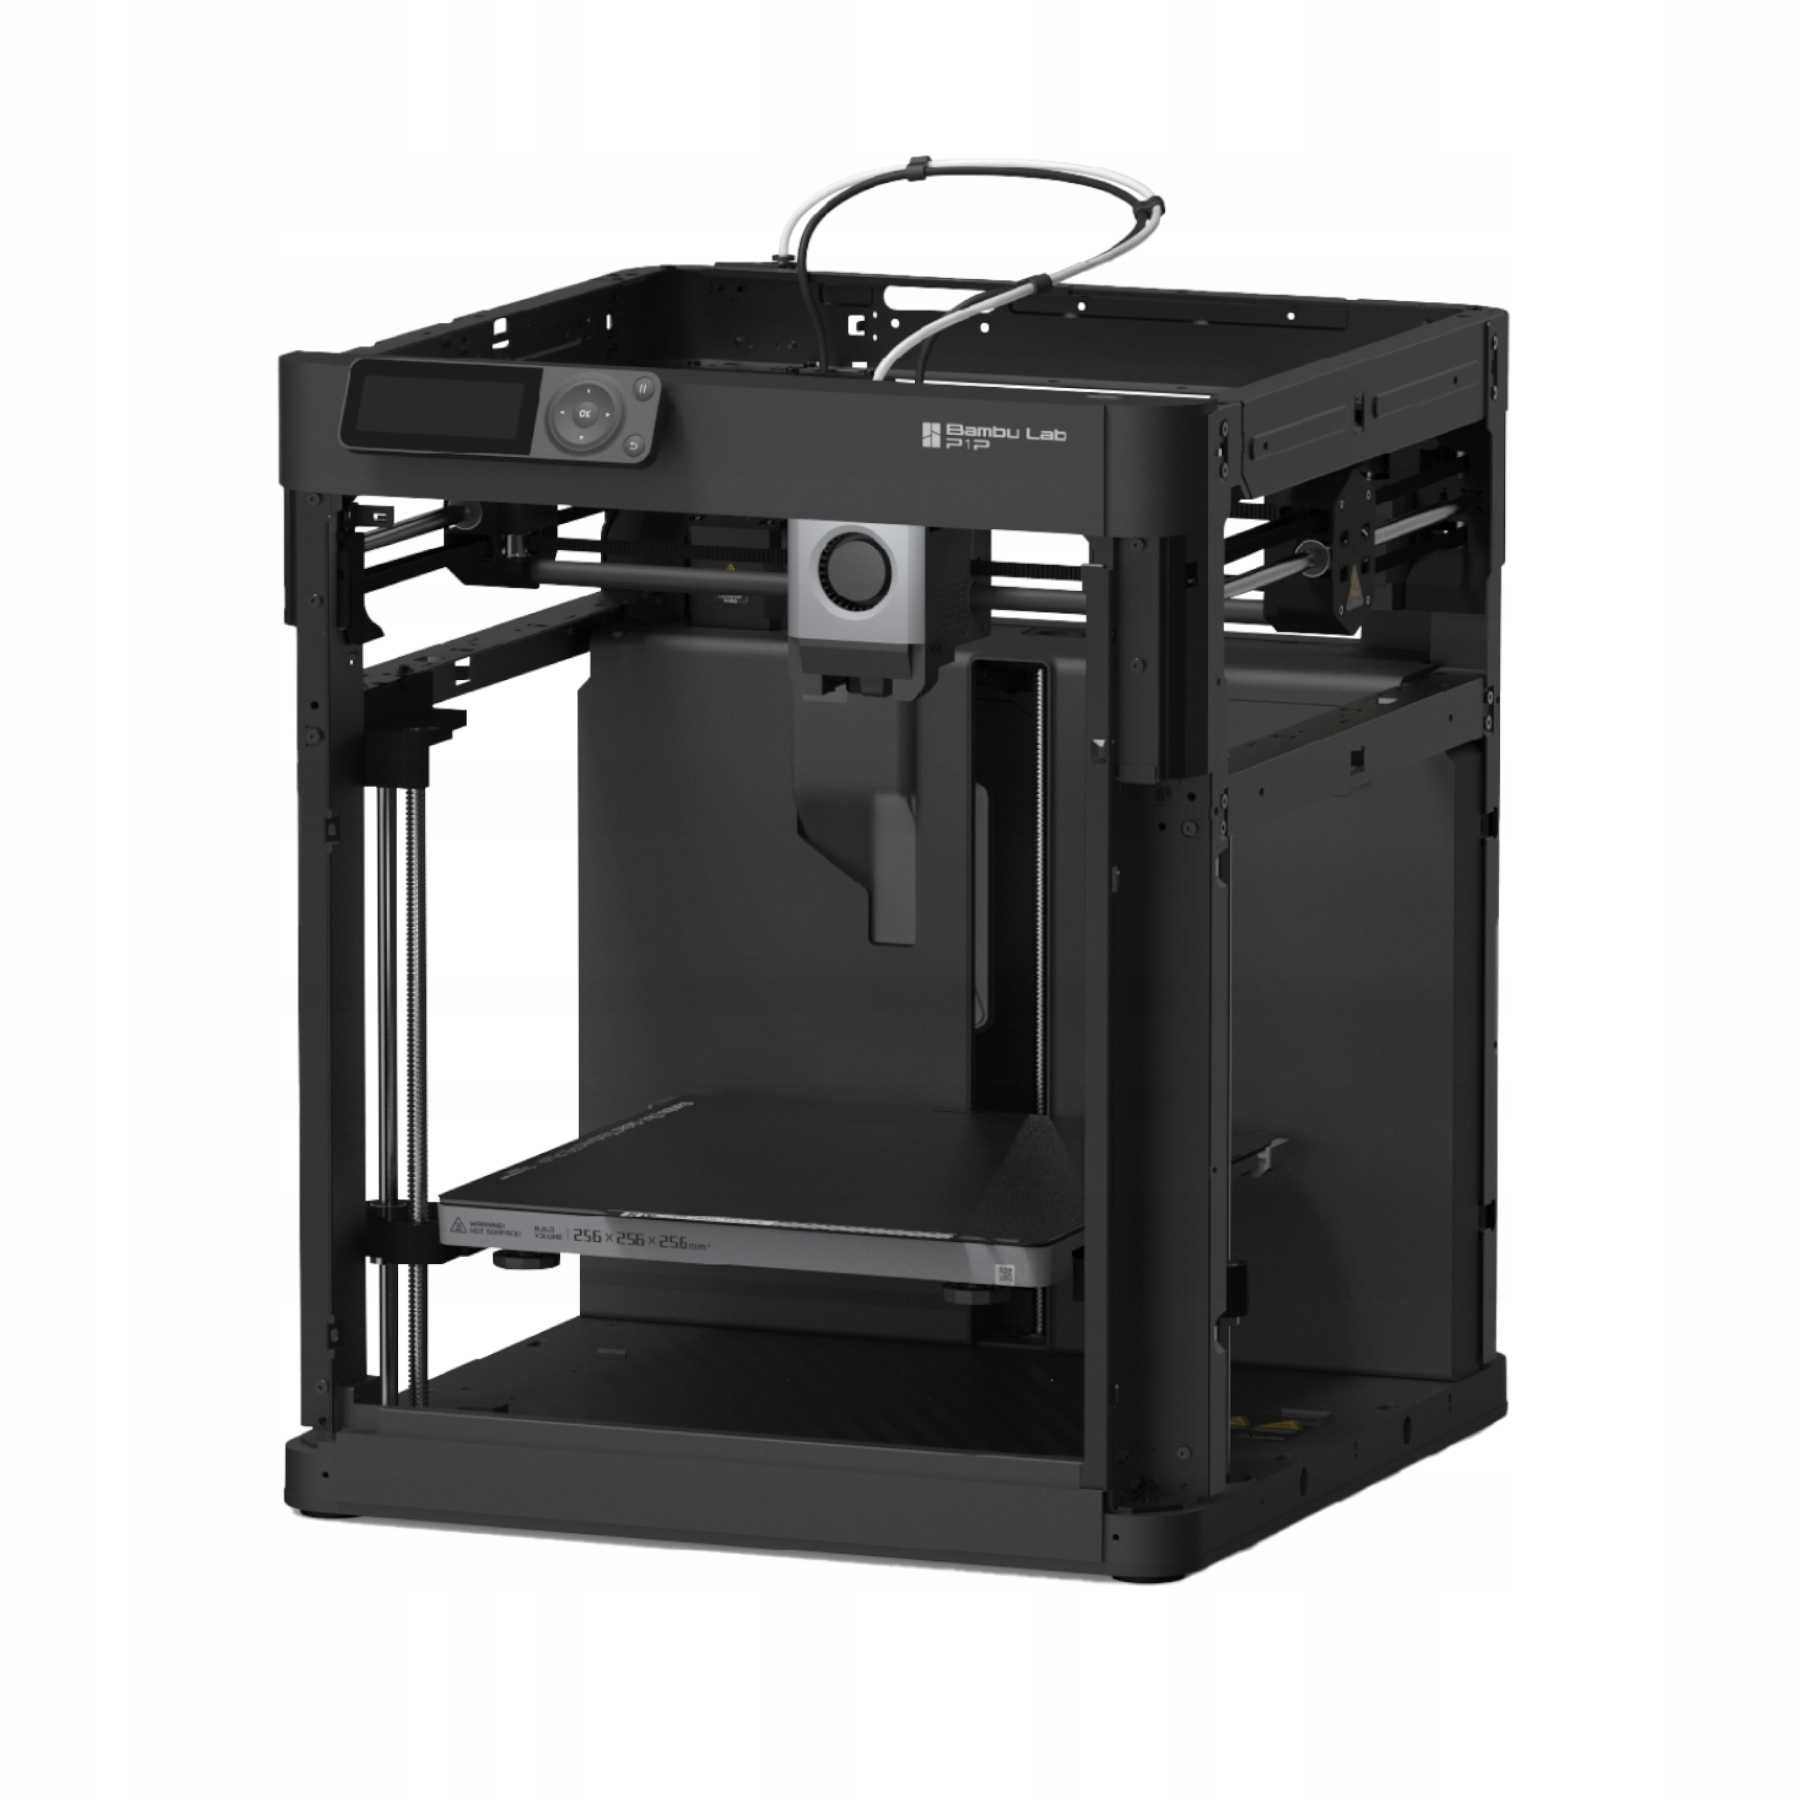 3D-принтер Bambu LAB P1P 256 х 256 х 256 мм